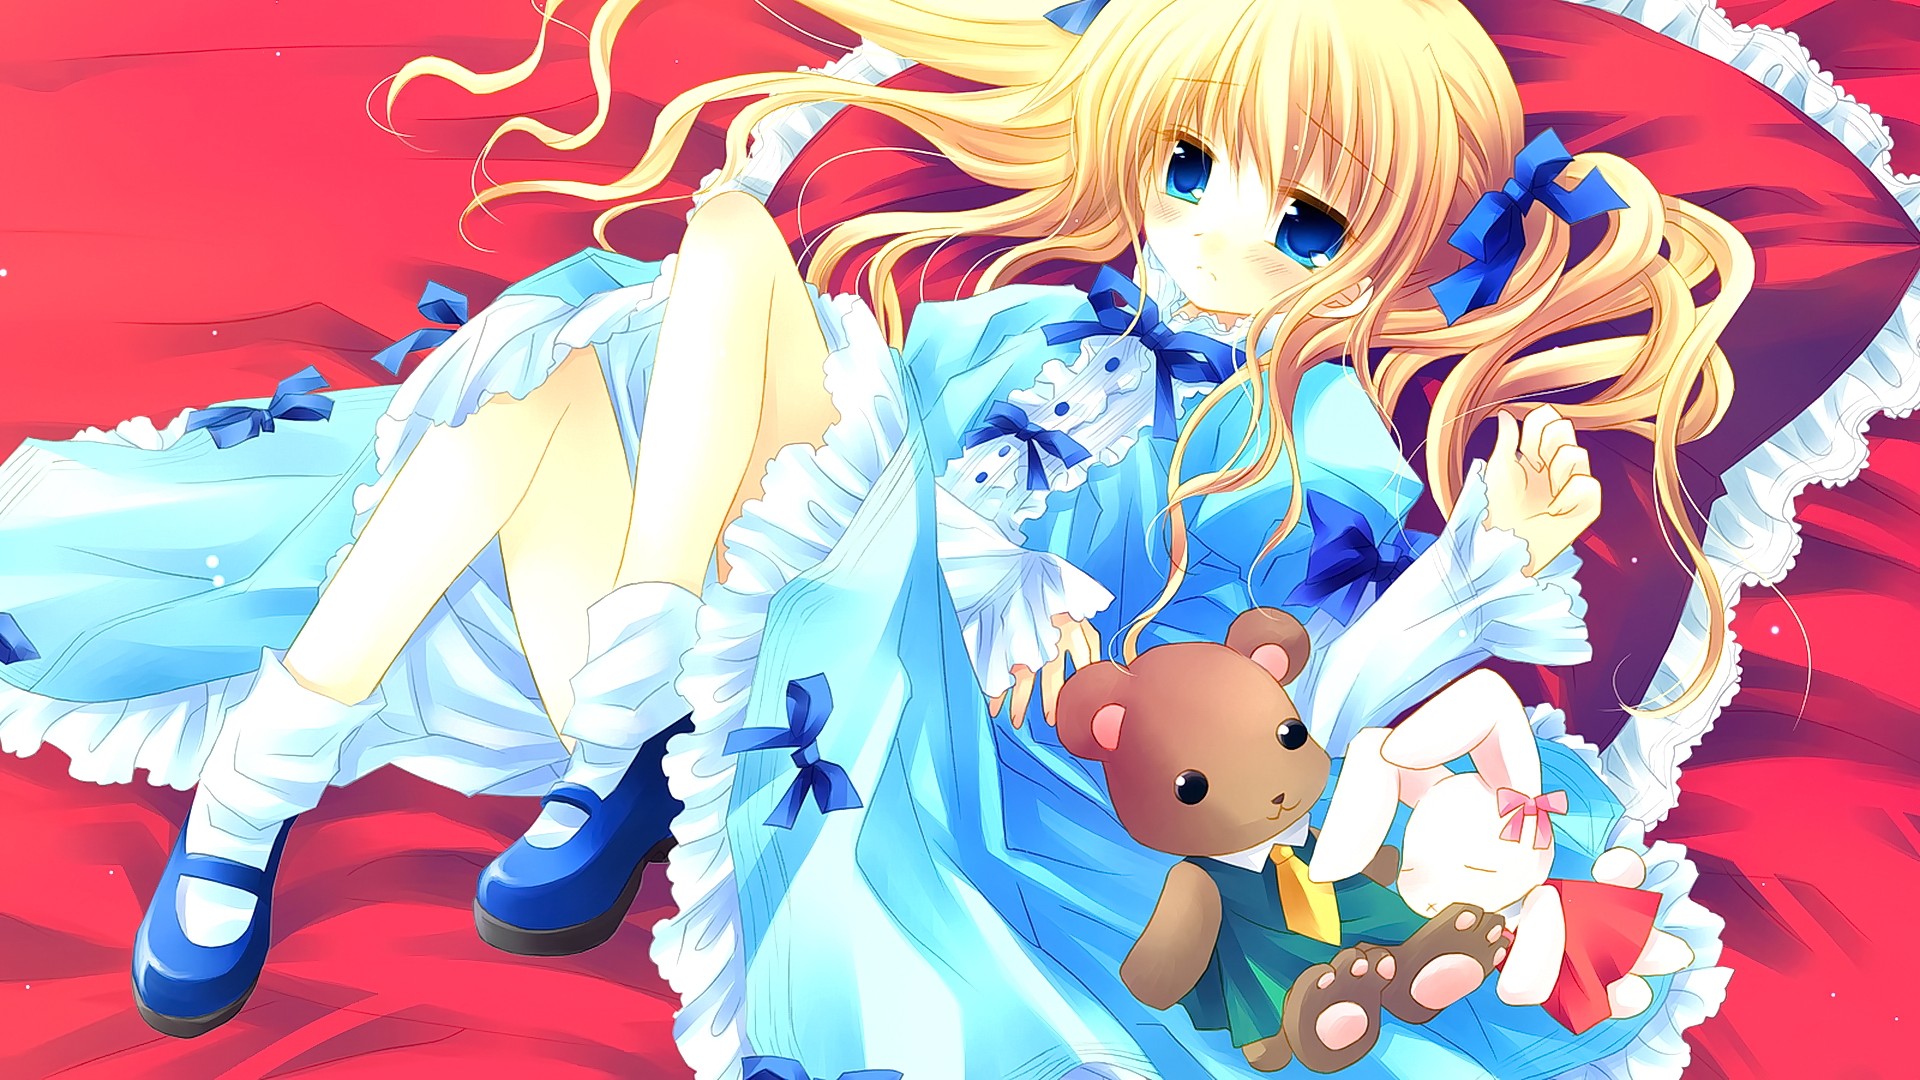 Anime 1920x1080 anime anime girls blonde blue eyes long hair sitting sadness looking at viewer original characters plush toy dress cyan dress